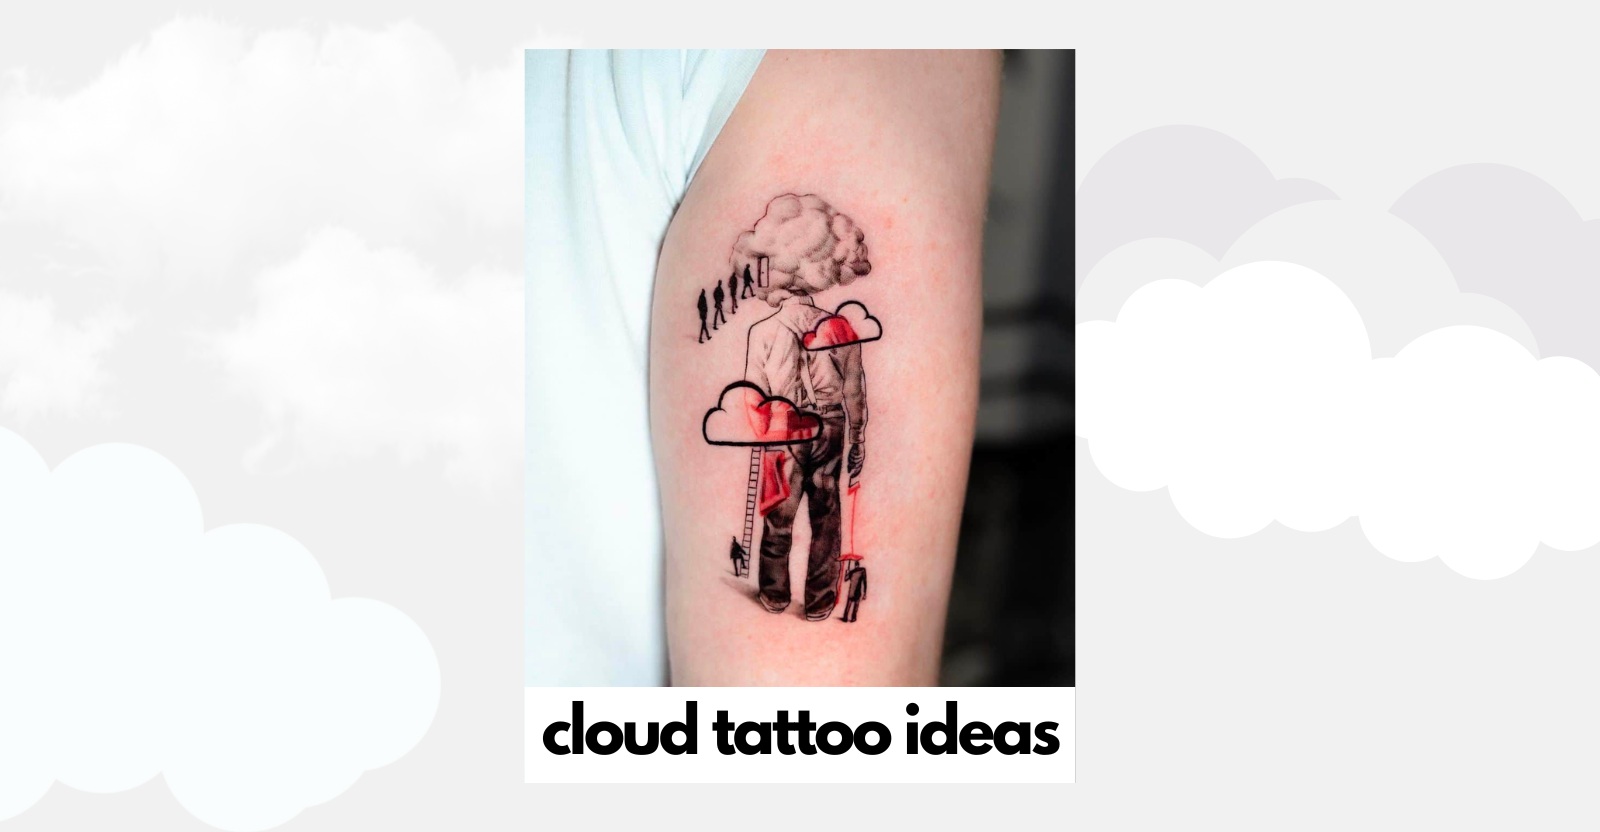 Cloud tattoo design ideas